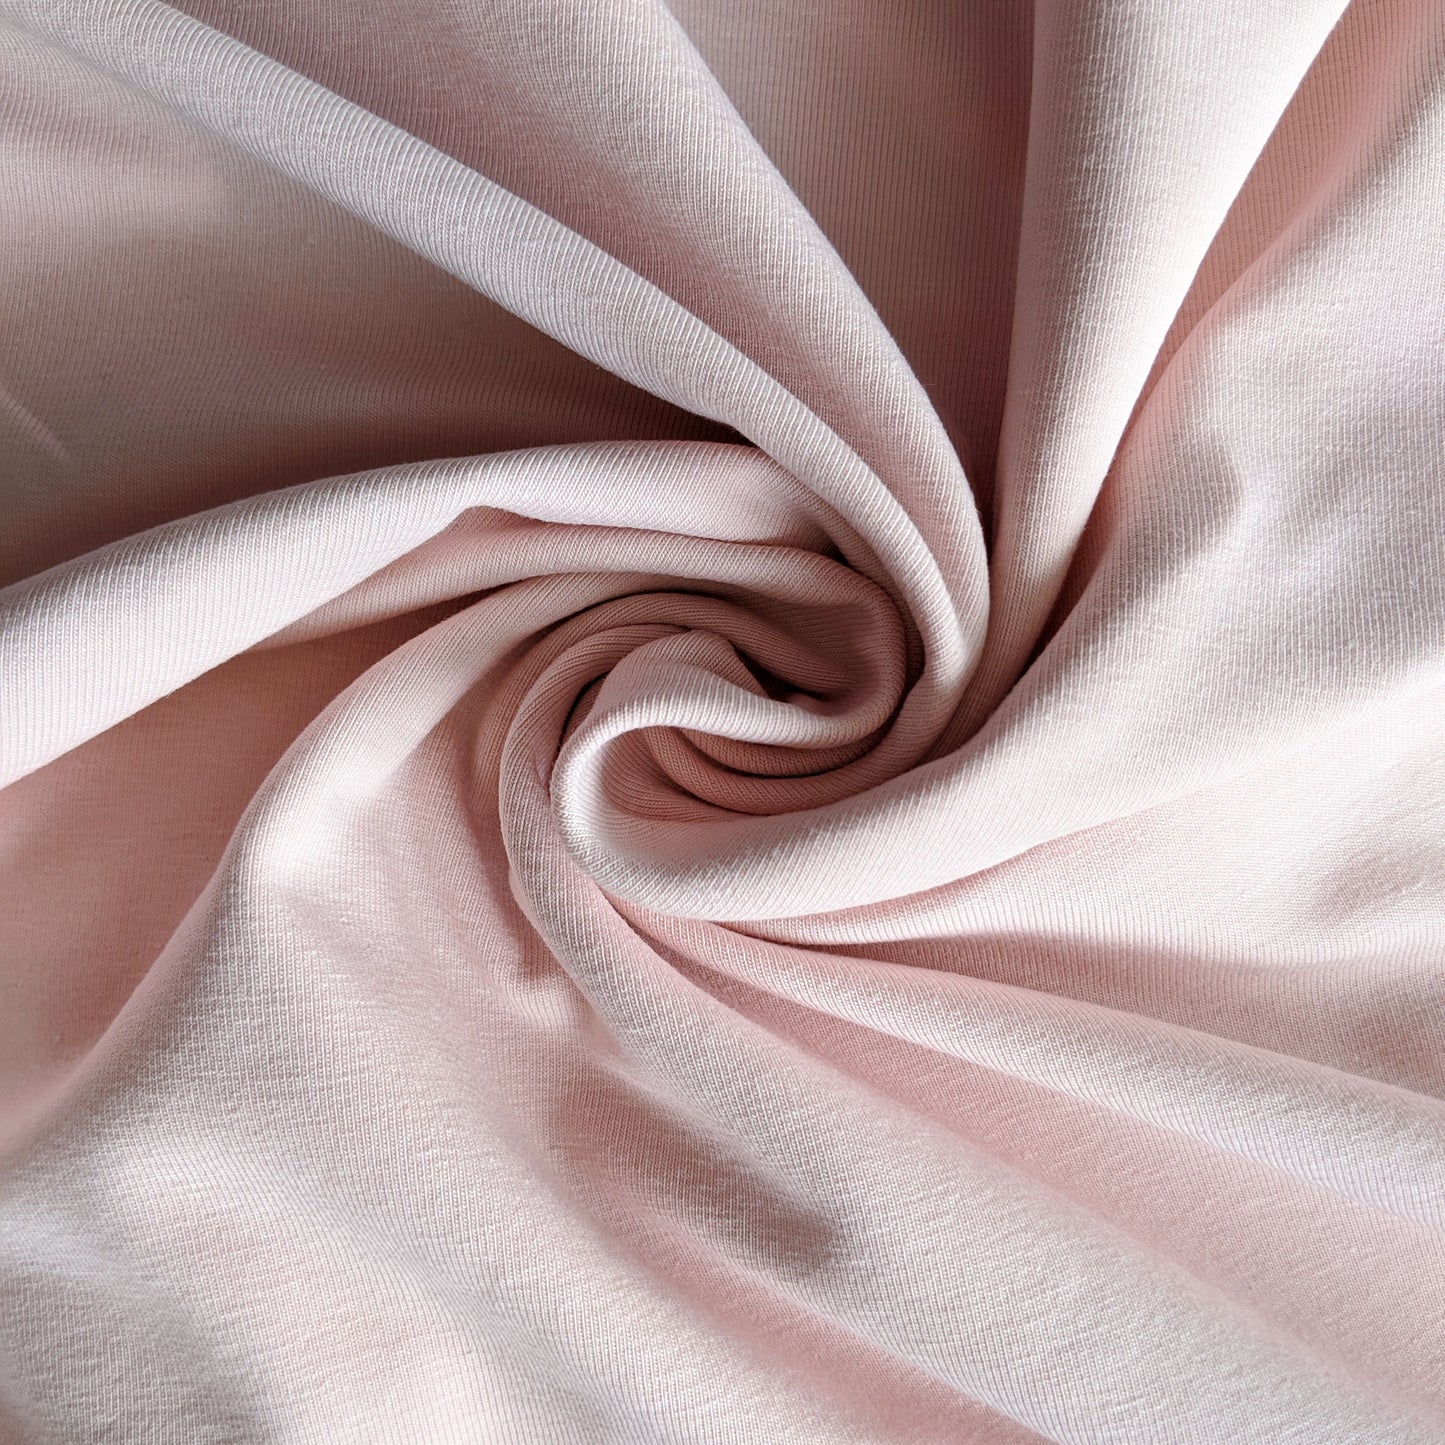 Pale Pink Cotton Jersey